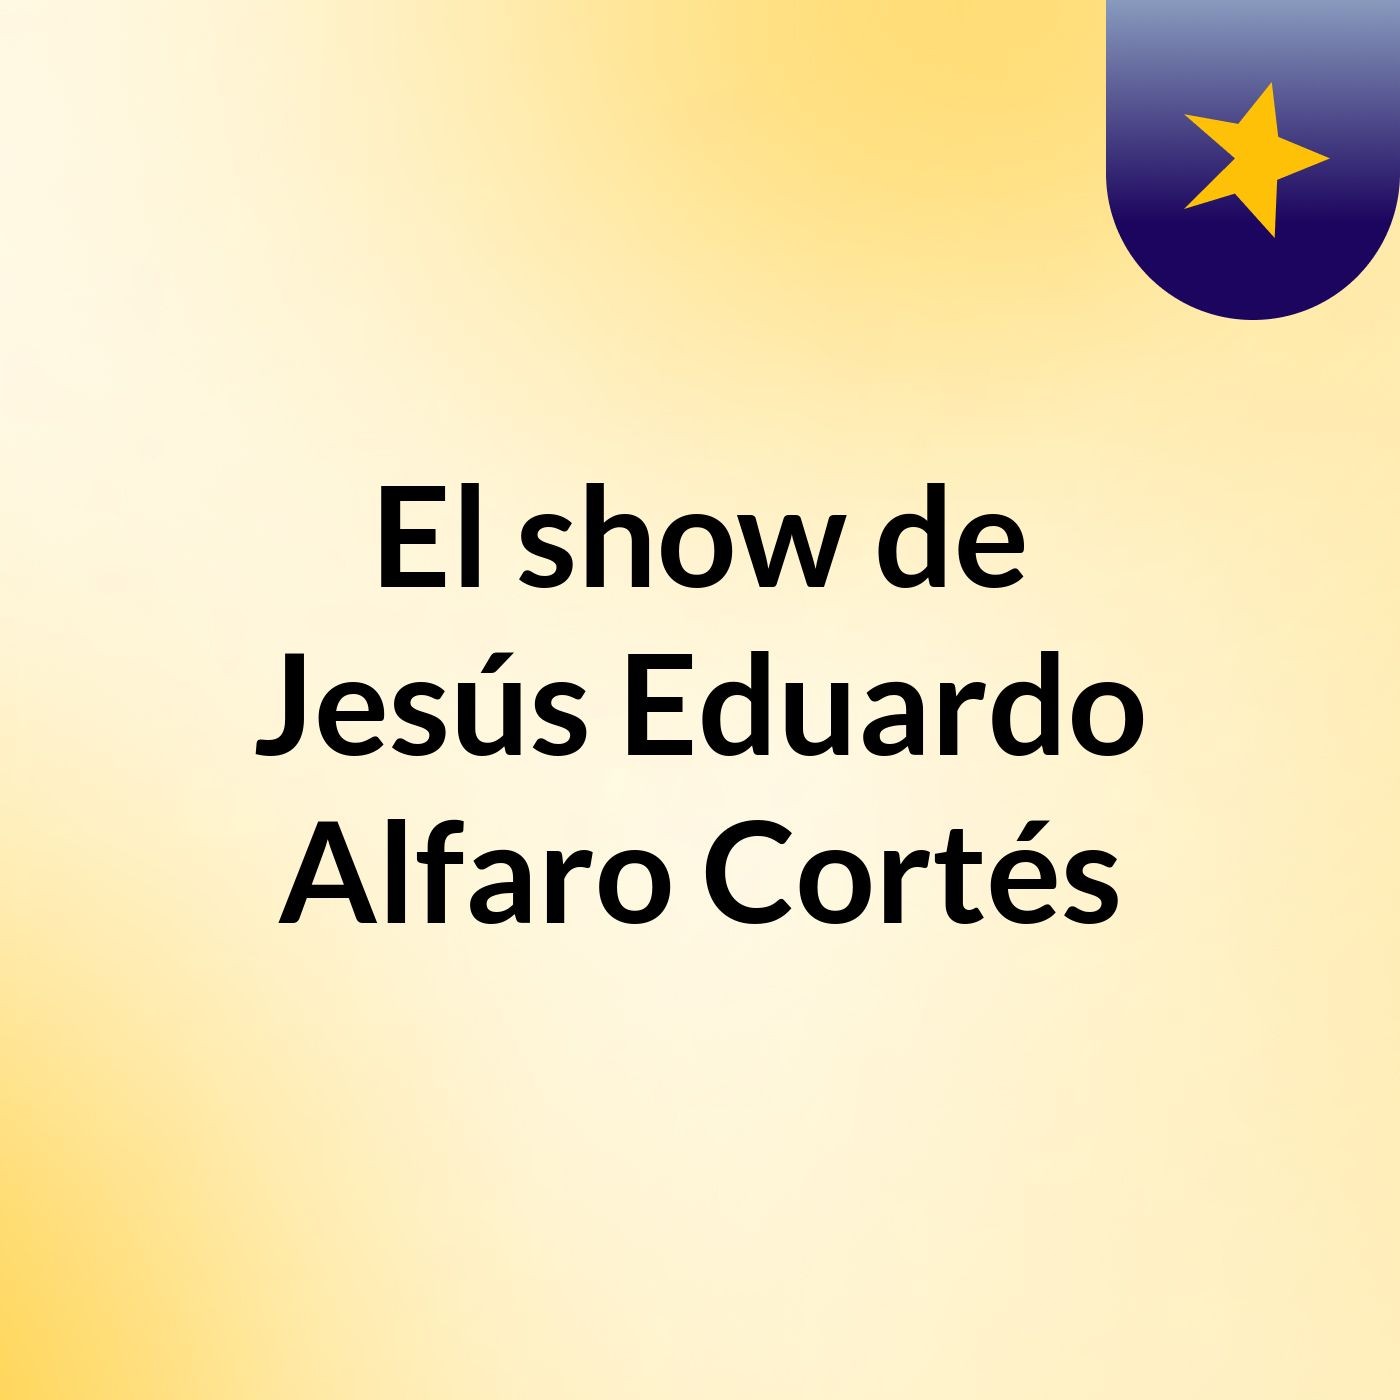 El show de Jesús Eduardo Alfaro Cortés